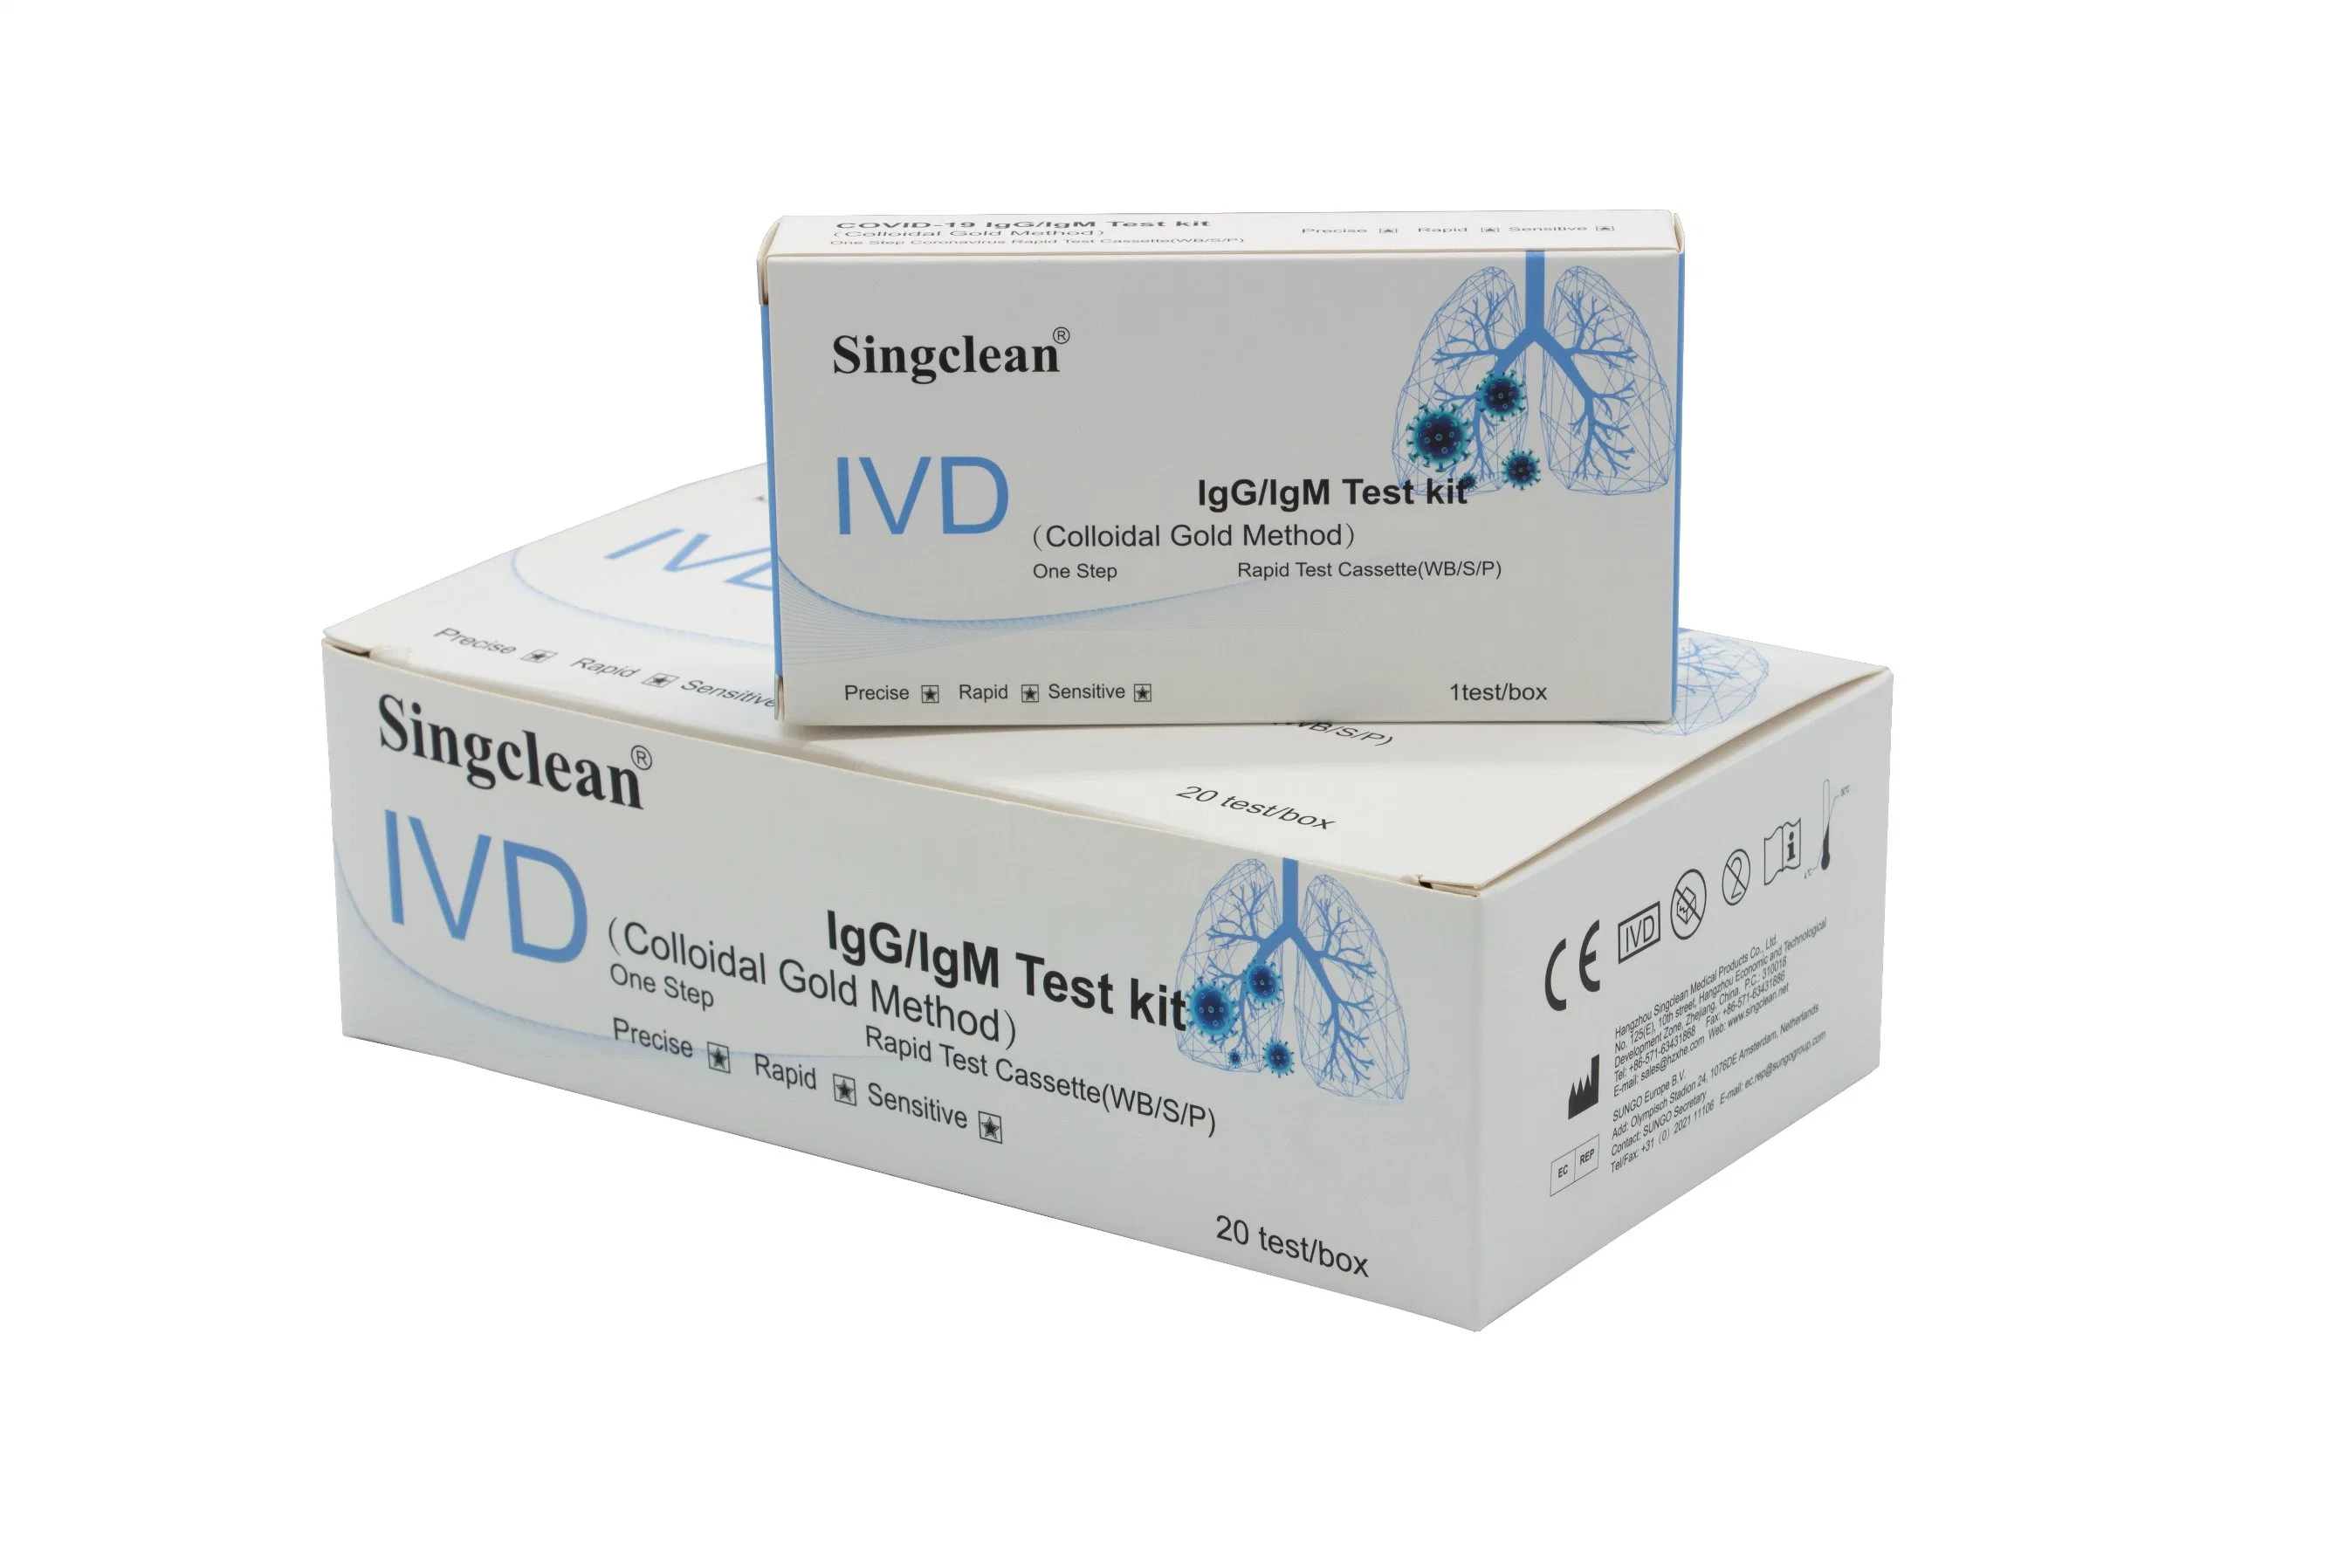 Anticuerpo/Kit de pruebas de diagnóstico Kits de prueba de anticuerpos Igg/anticuerpo Igm prueba de diagnóstico rápido